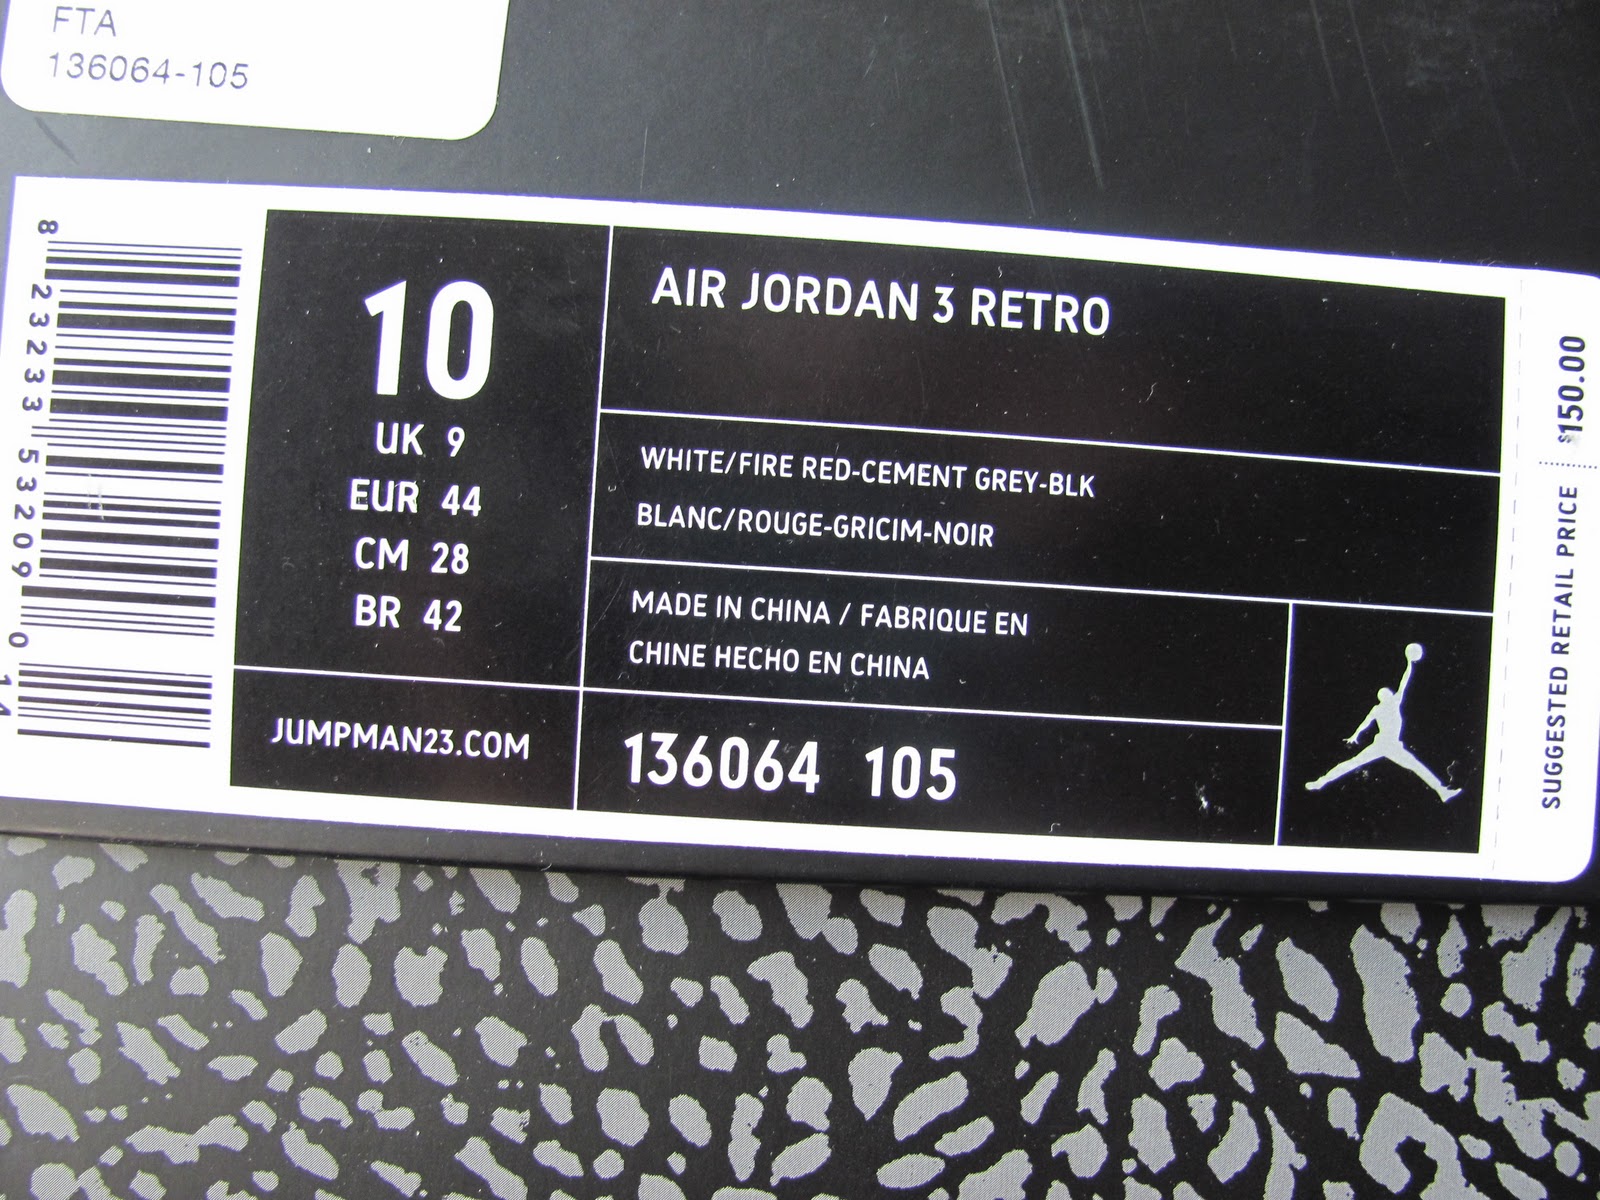 Confessions, Rants, Raves & Random Thoughts: Air Jordan 3 Retro